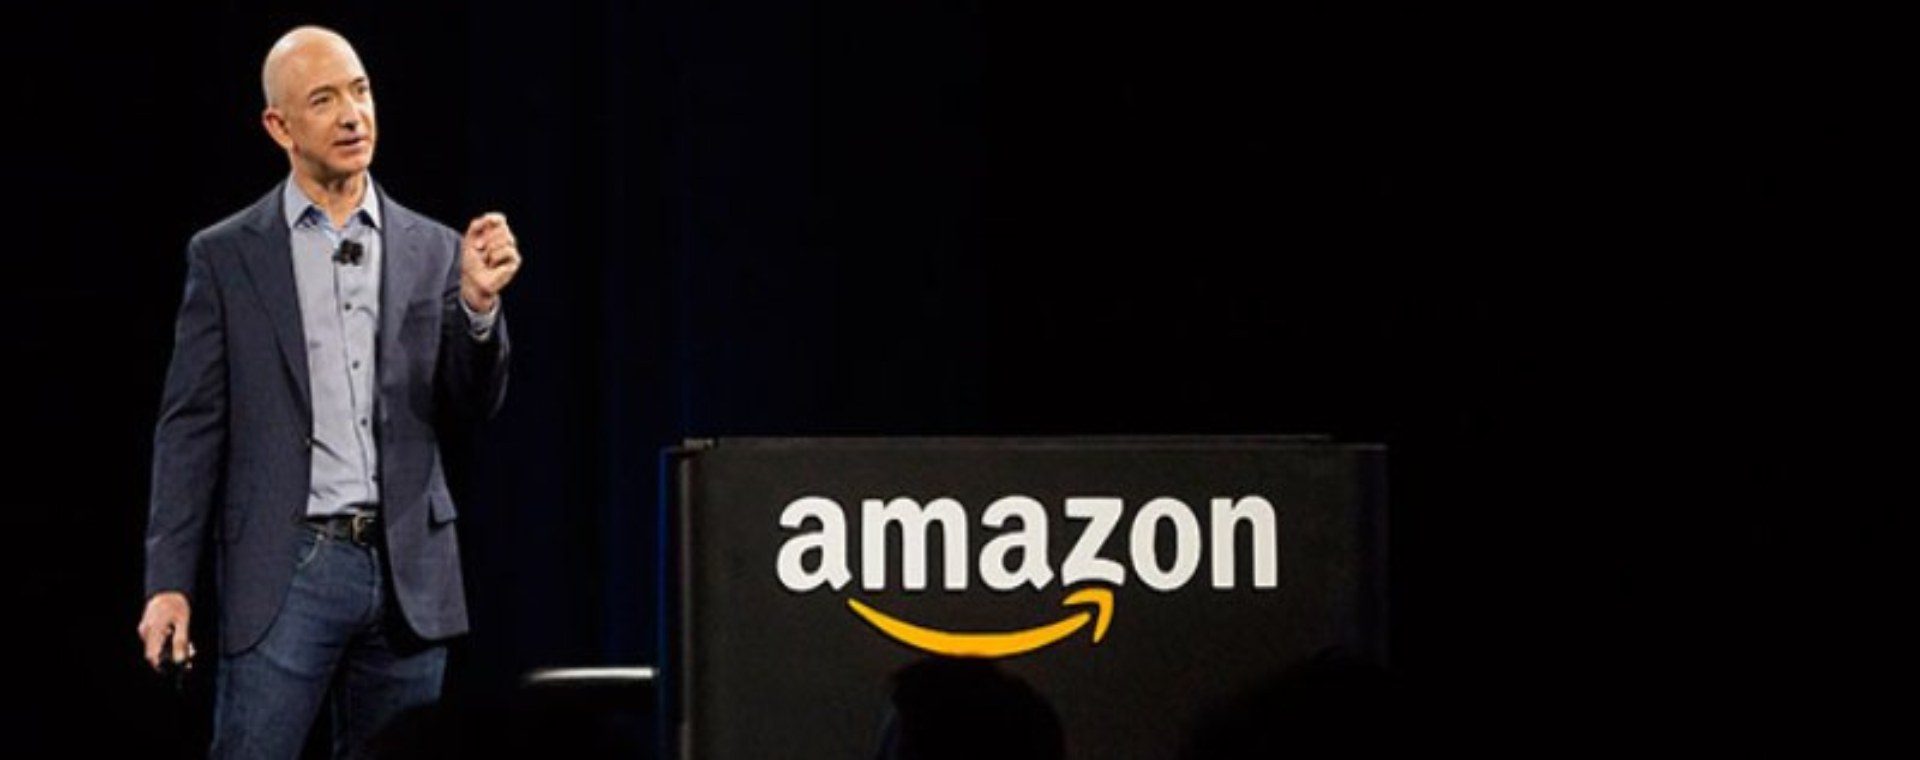 CEO Amazon Jeff Bezos semakin kaya saat pandemi virus Corona (Covid-19). - Intheblack